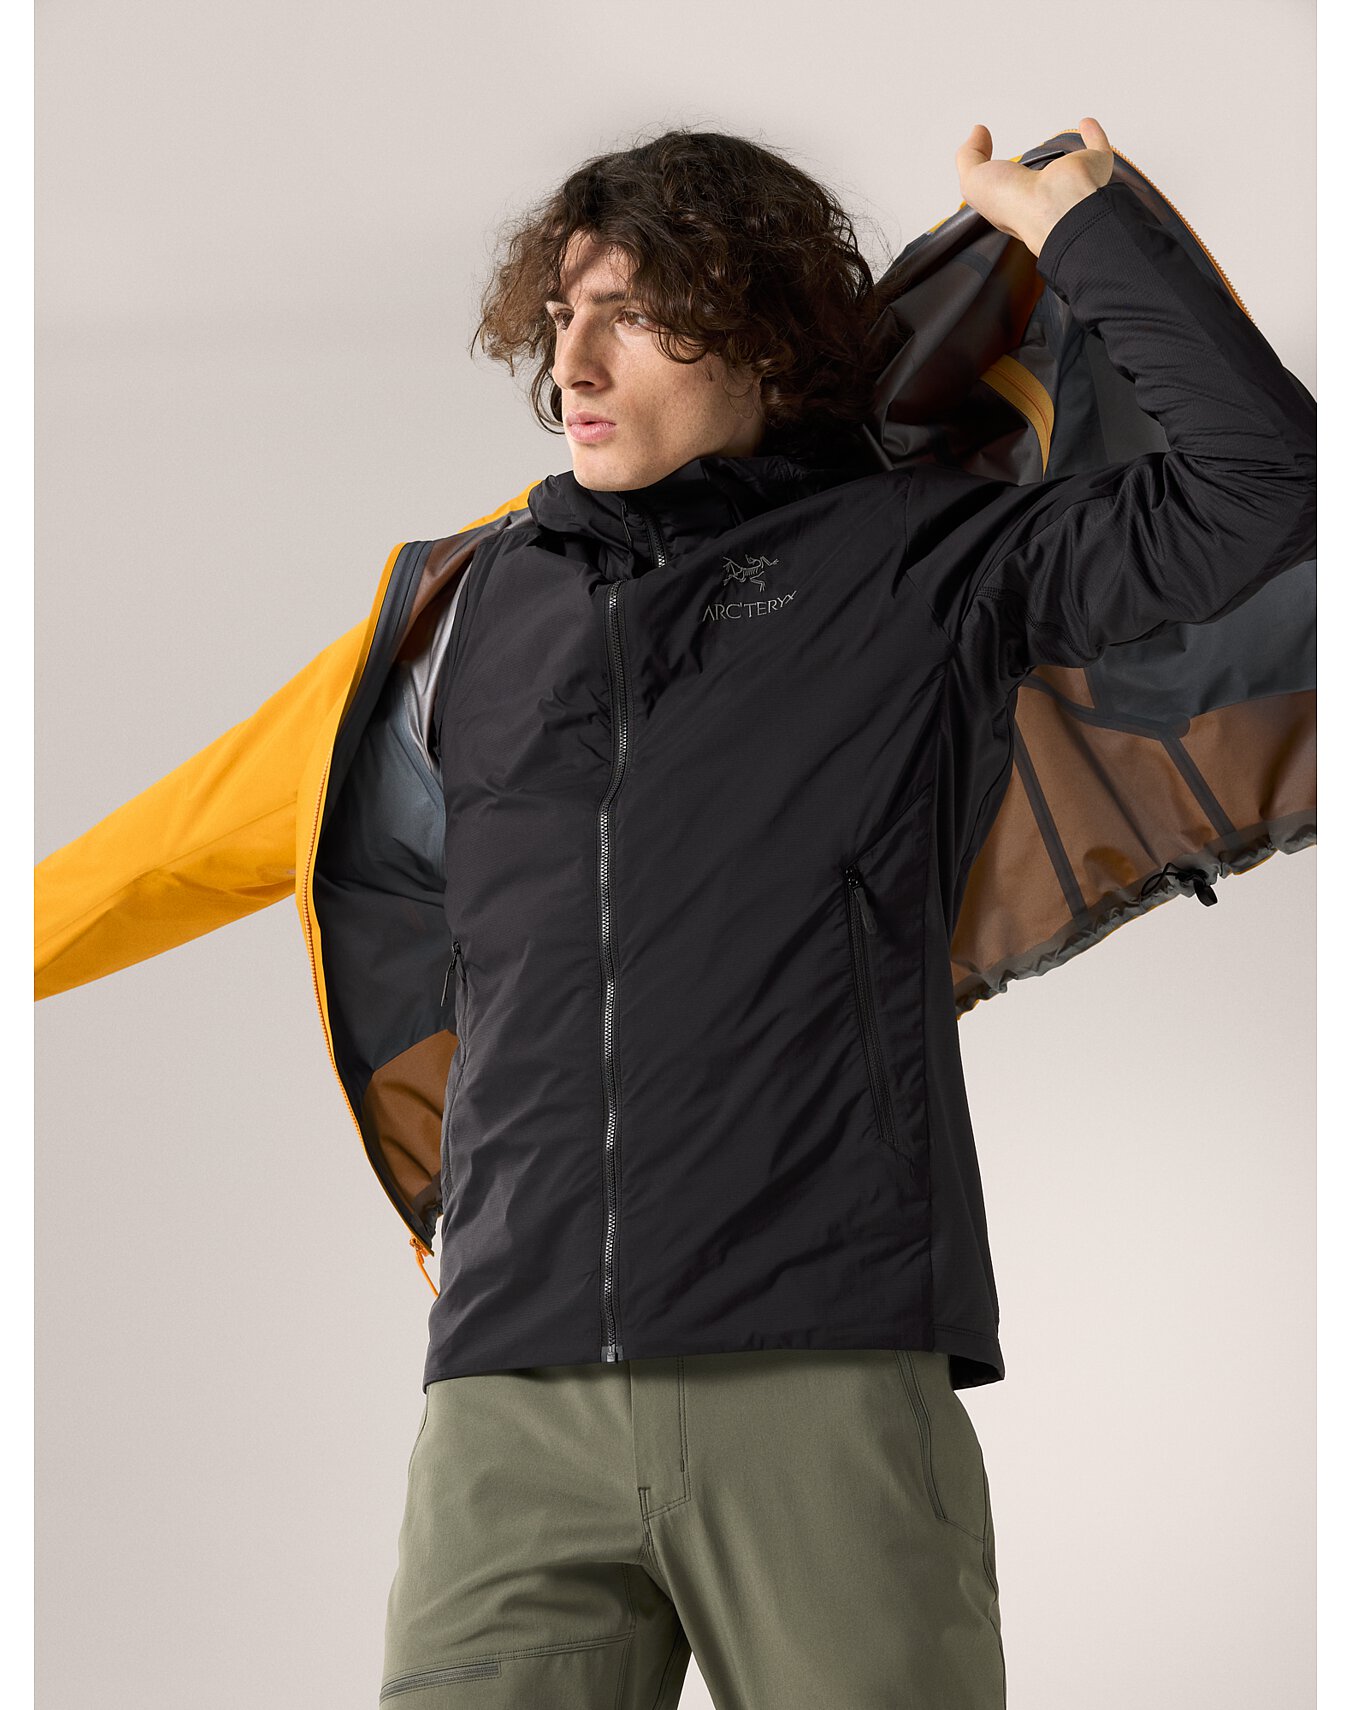 Men's Insulated Jackets | Arc'teryx